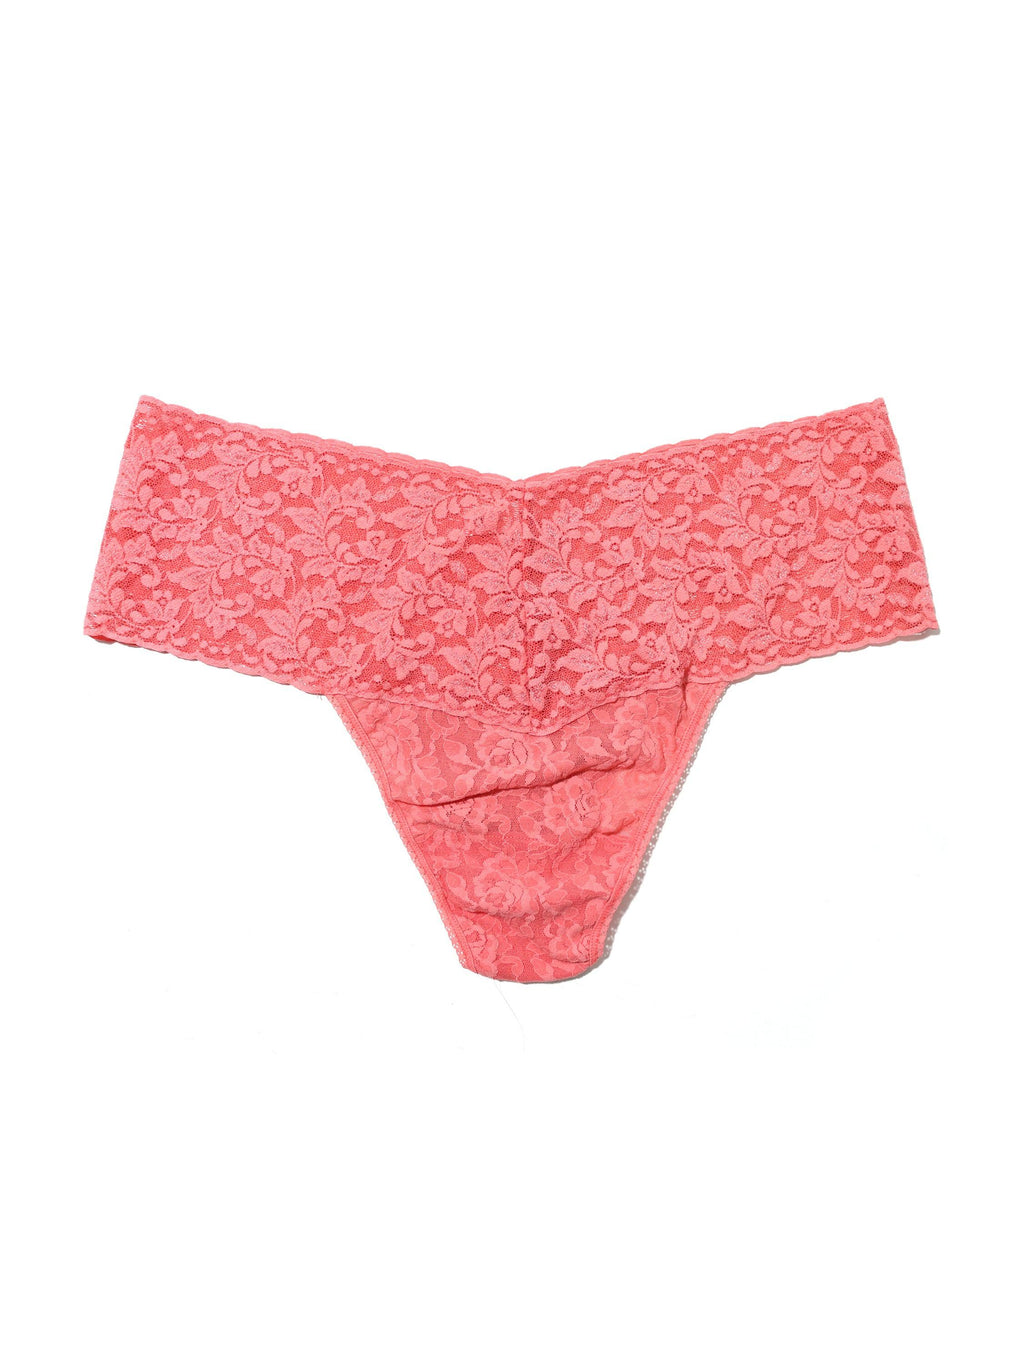 Plus Size Retro Lace Thong Guava Pink | Hanky Panky